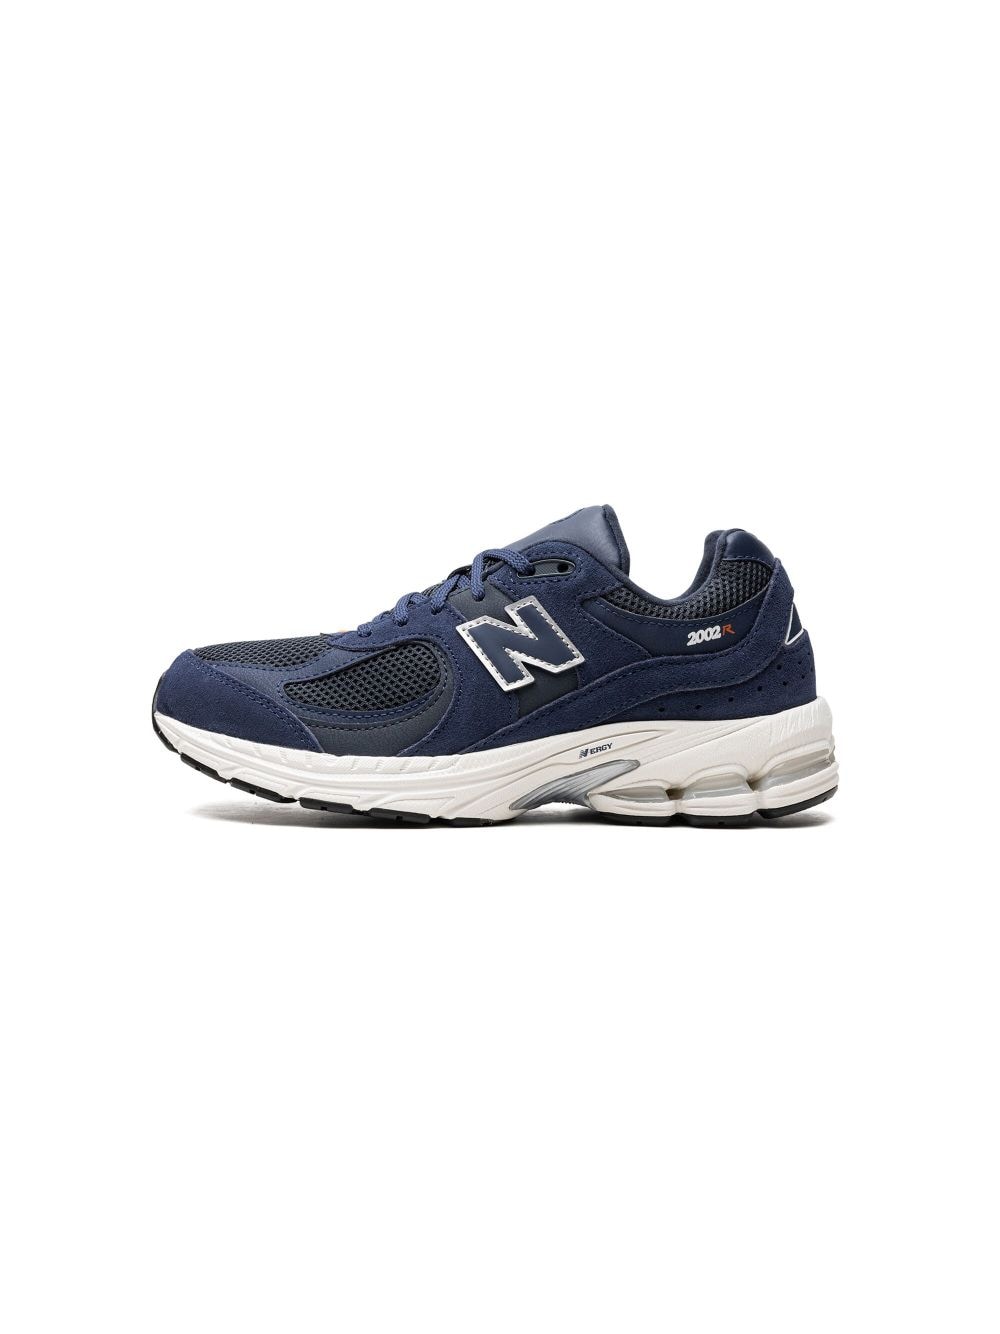 Shop New Balance 2002r "blue/black" Sneakers